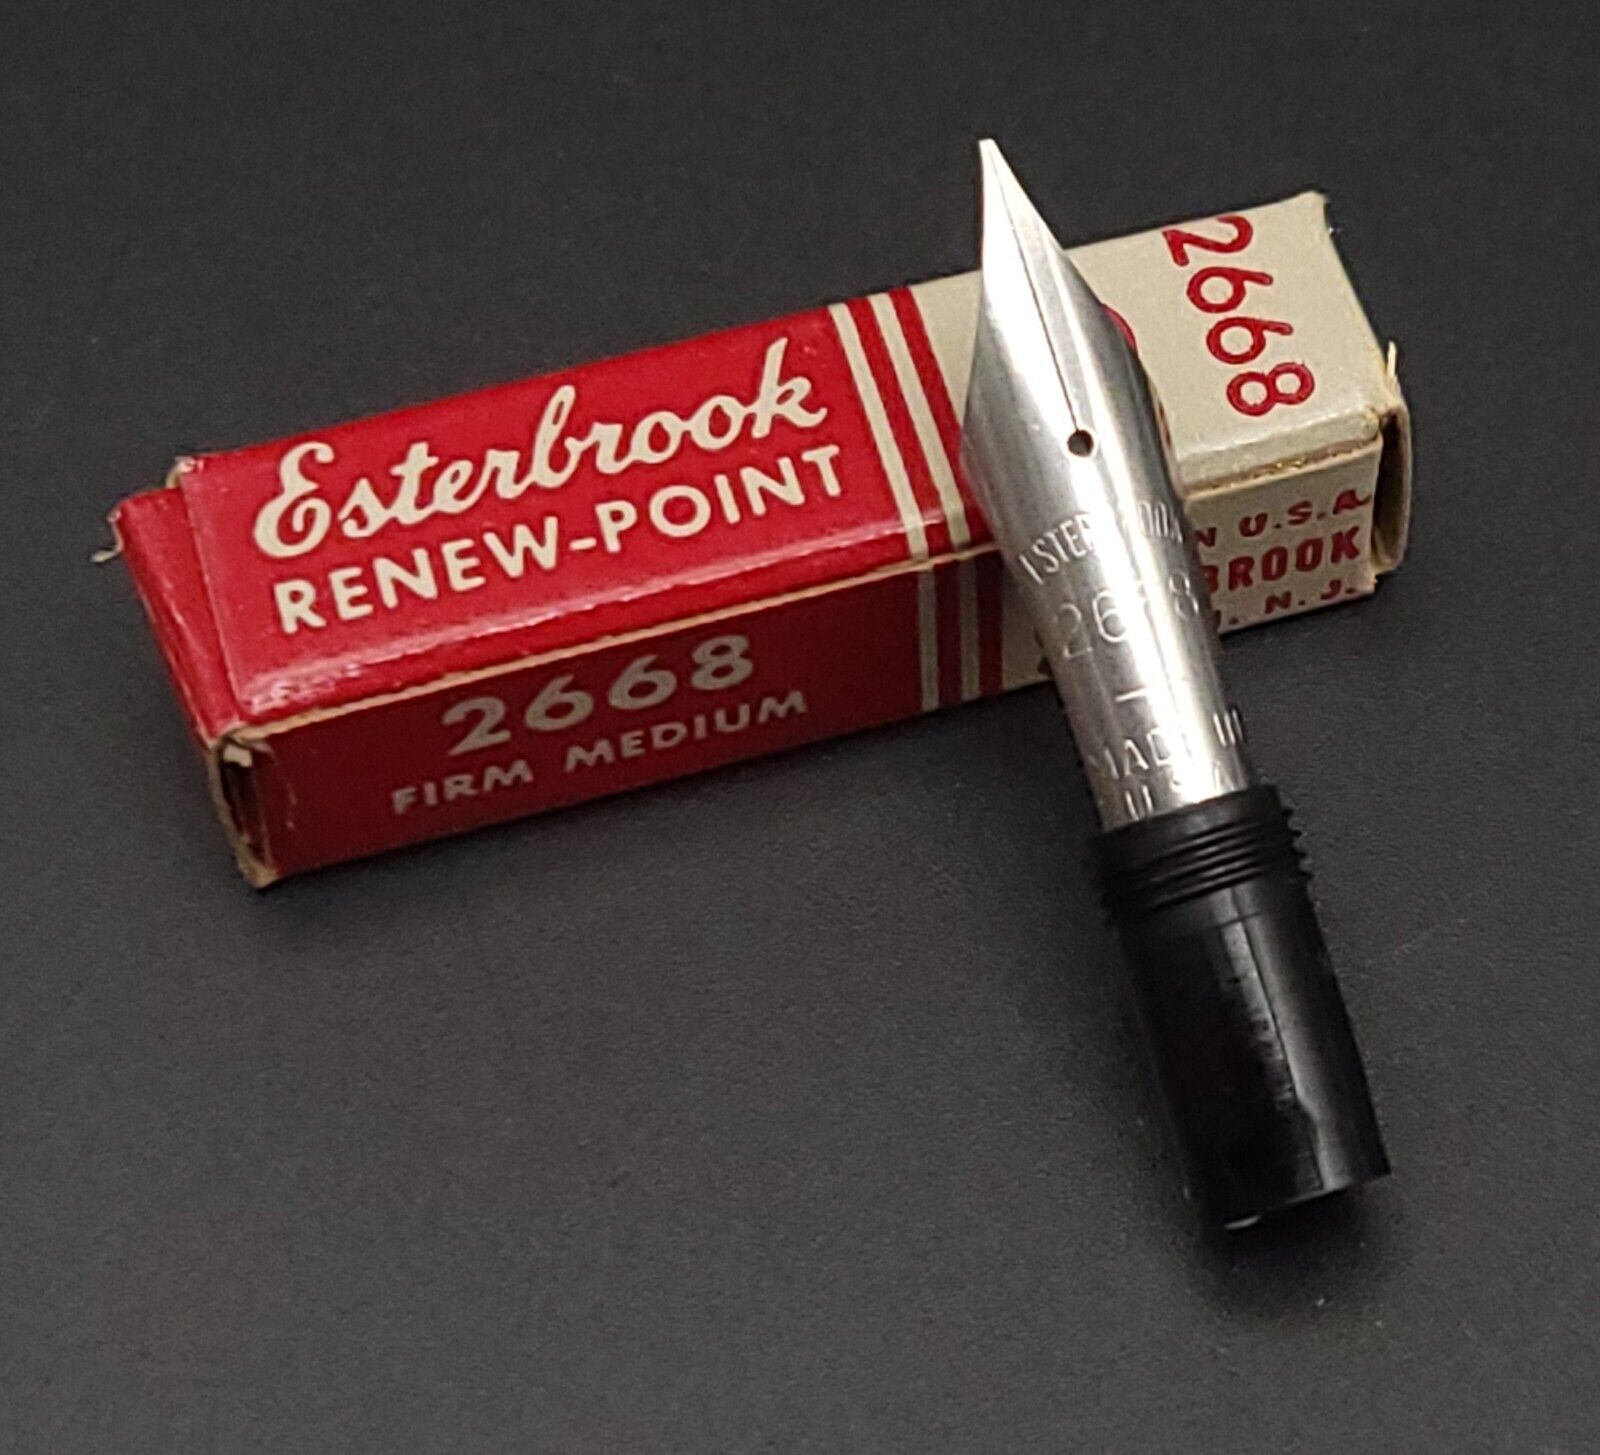 Esterbrook Firm Medium M 2668 Renew Point Fountain Pen Nib Unit - Vintage - NOS